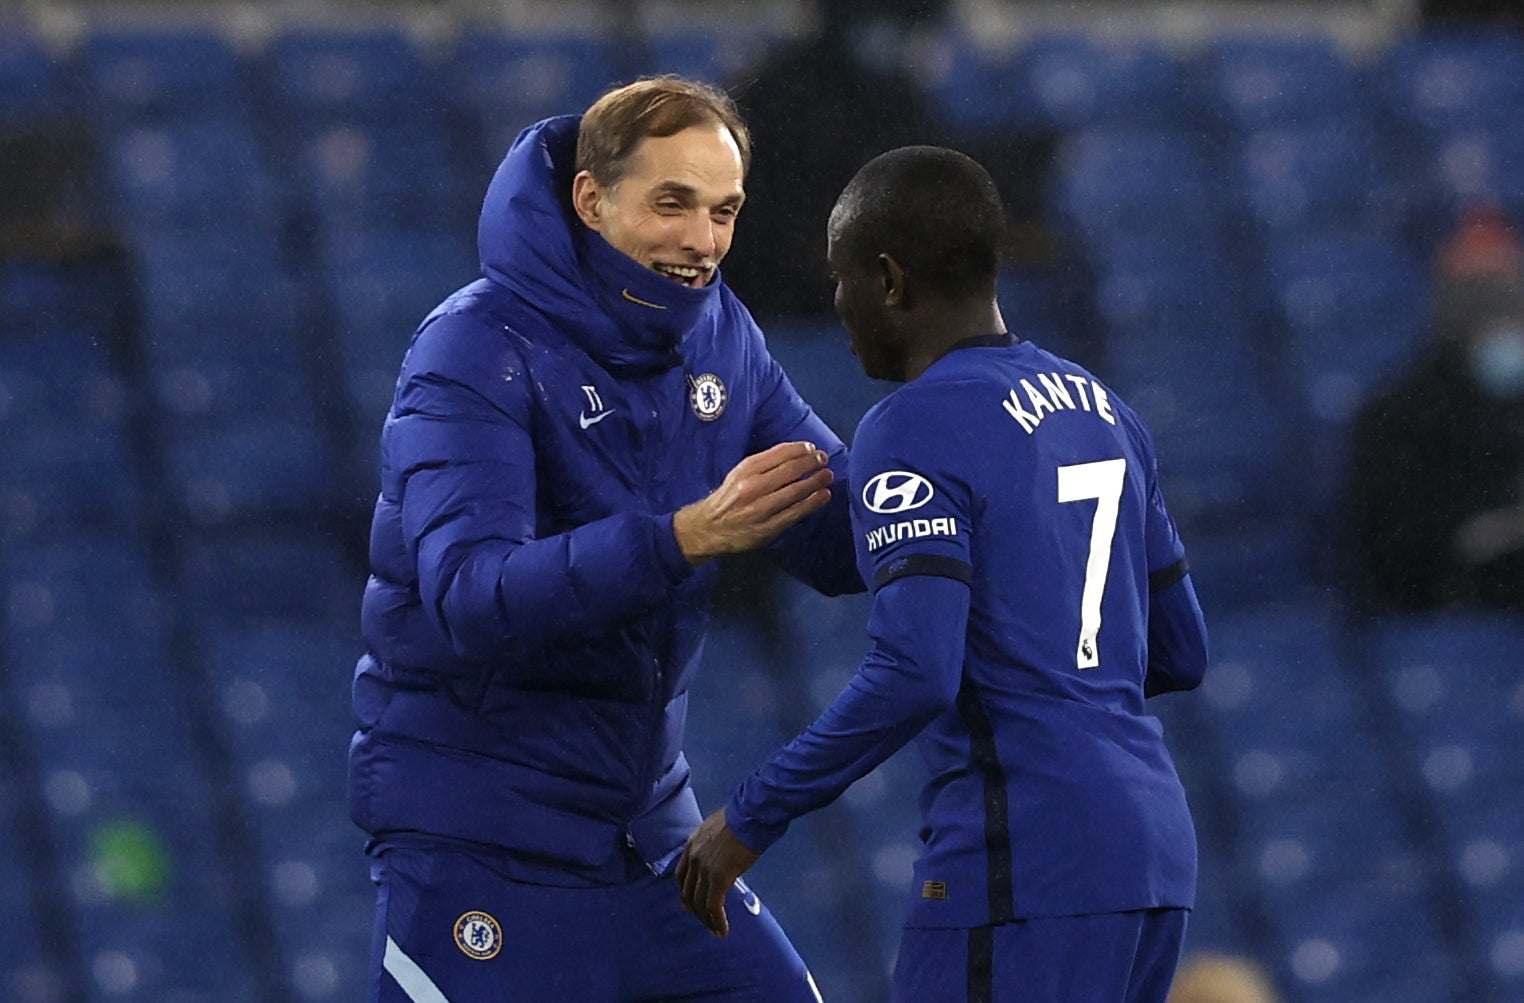 Chelsea manager Thomas Tuchel embraces N’Golo Kante